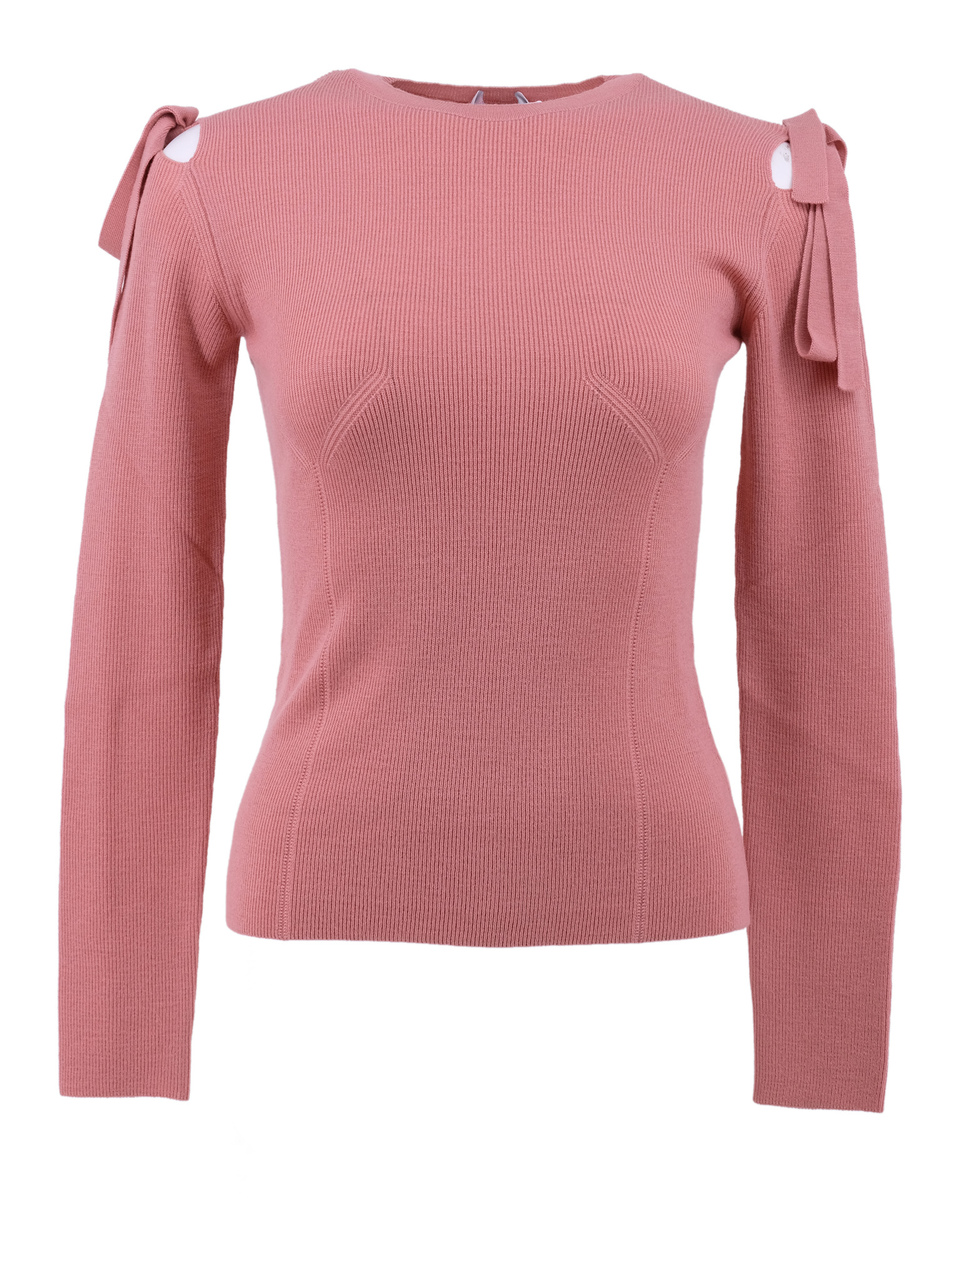 RED VALENTINO Розовый шерстяной джемпер / свитер, фото 1